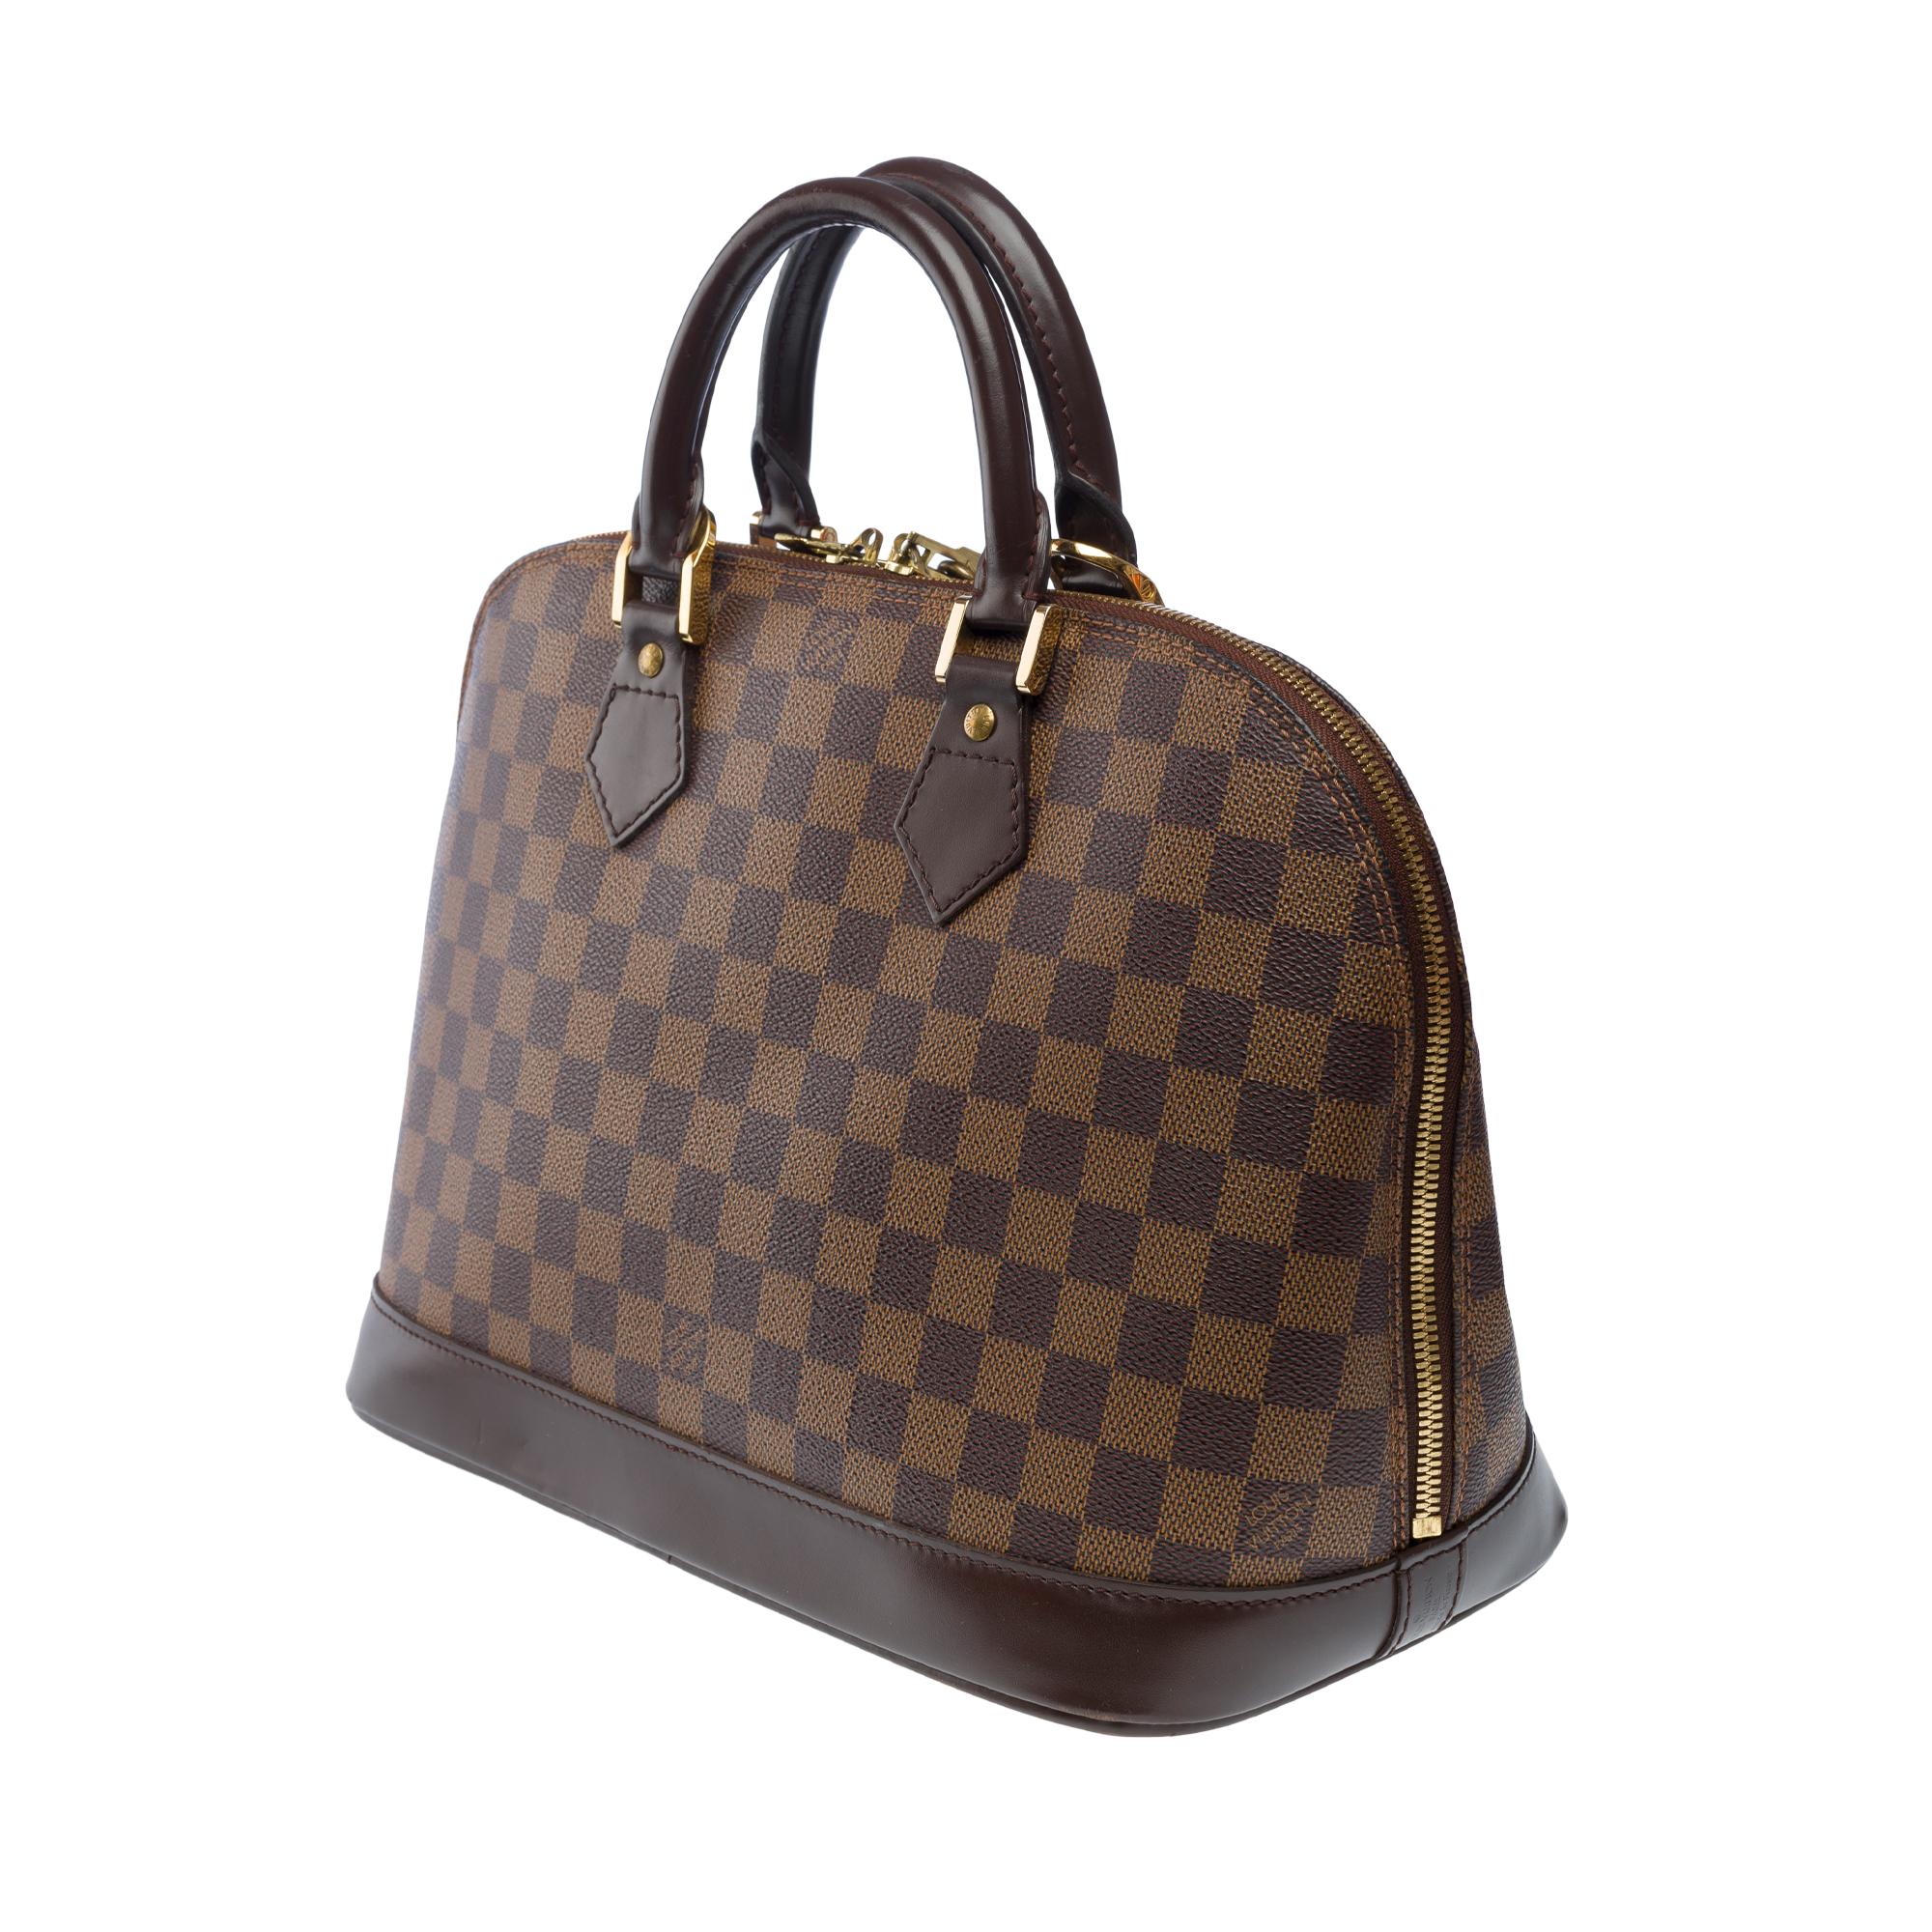 Lovely Louis Vuitton Alma handbag strap in brown damier canvas, GHW For Sale 1